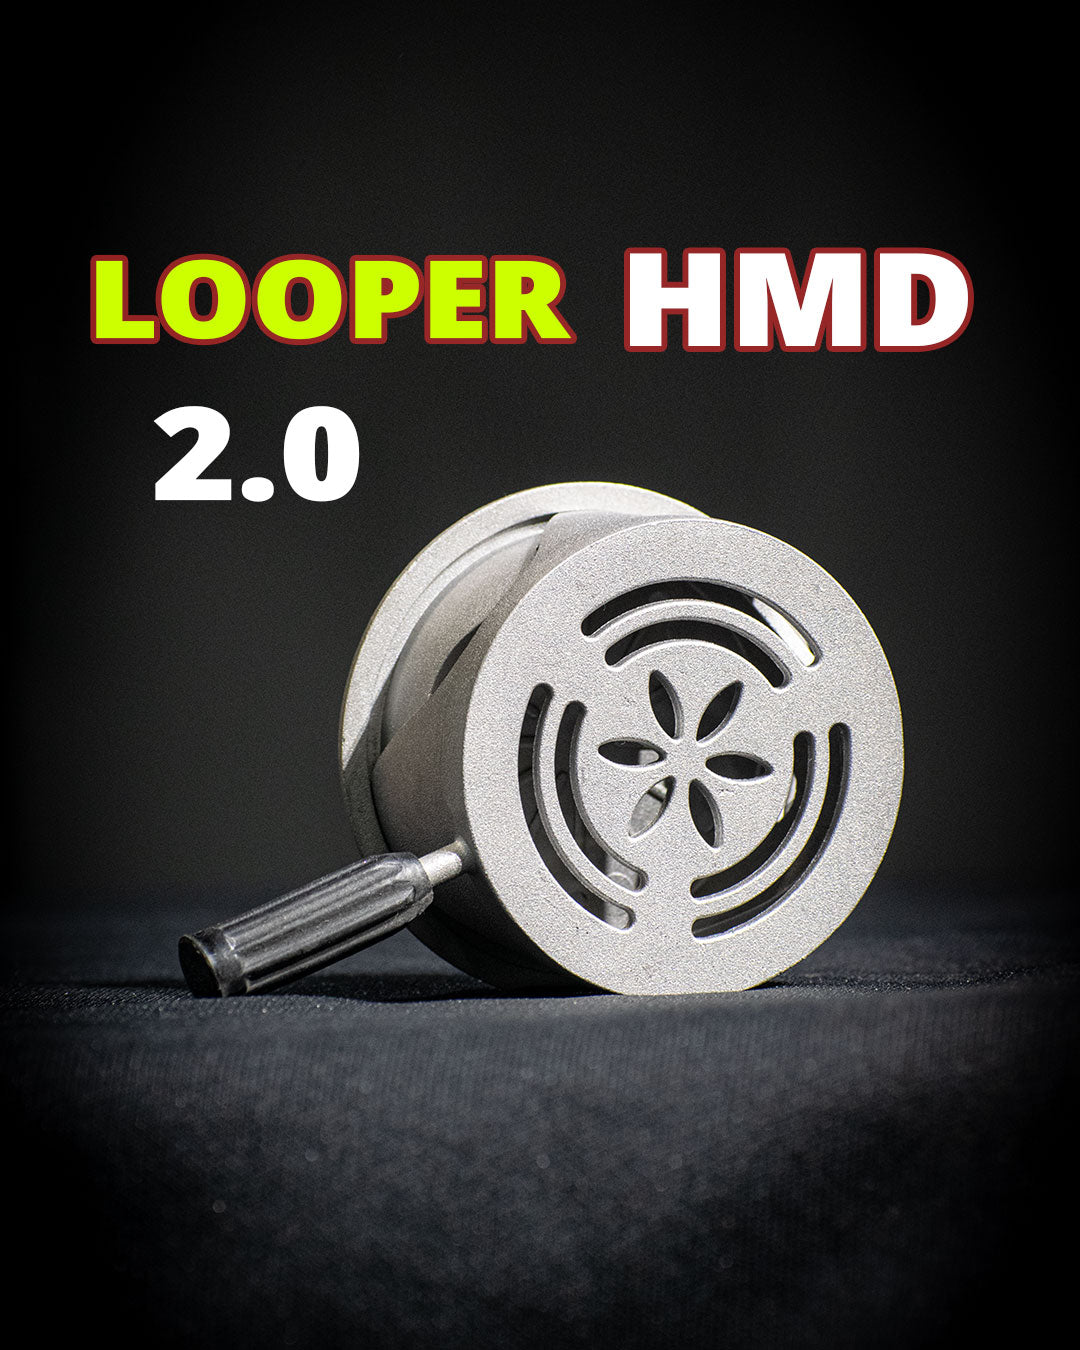 Looper 2.0 HMD - Hookah Heat Management Device